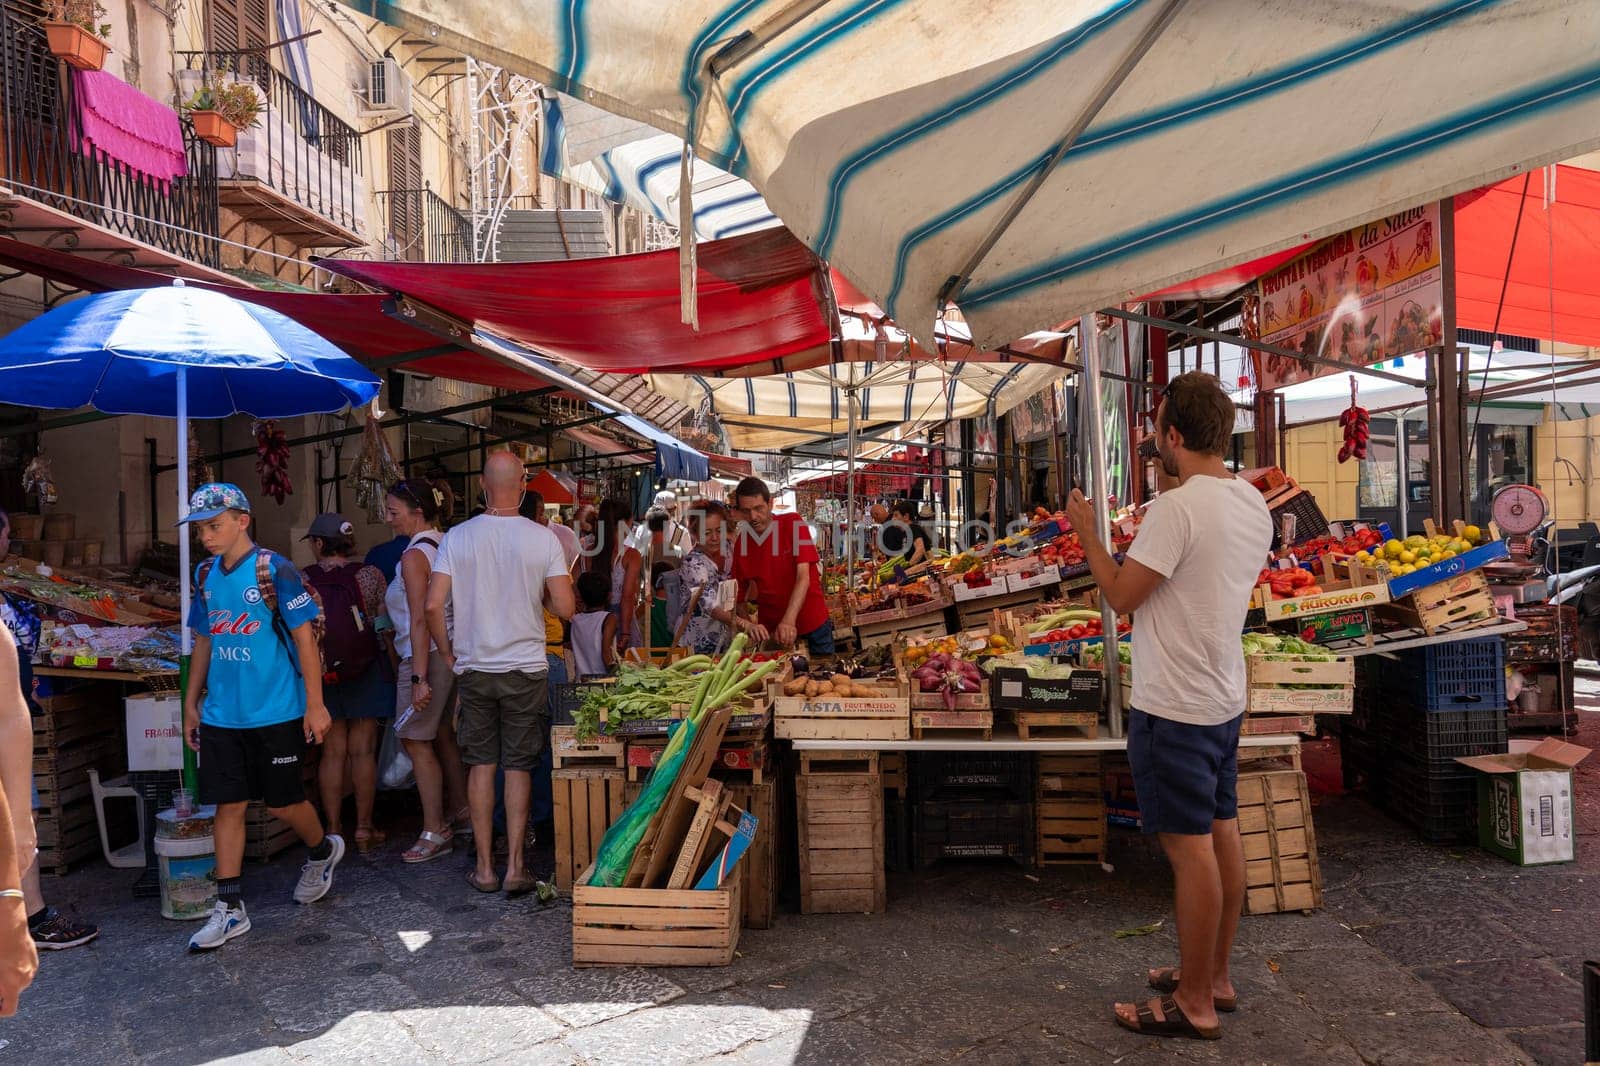 Capo Market in Palermo, Sicily by oliverfoerstner